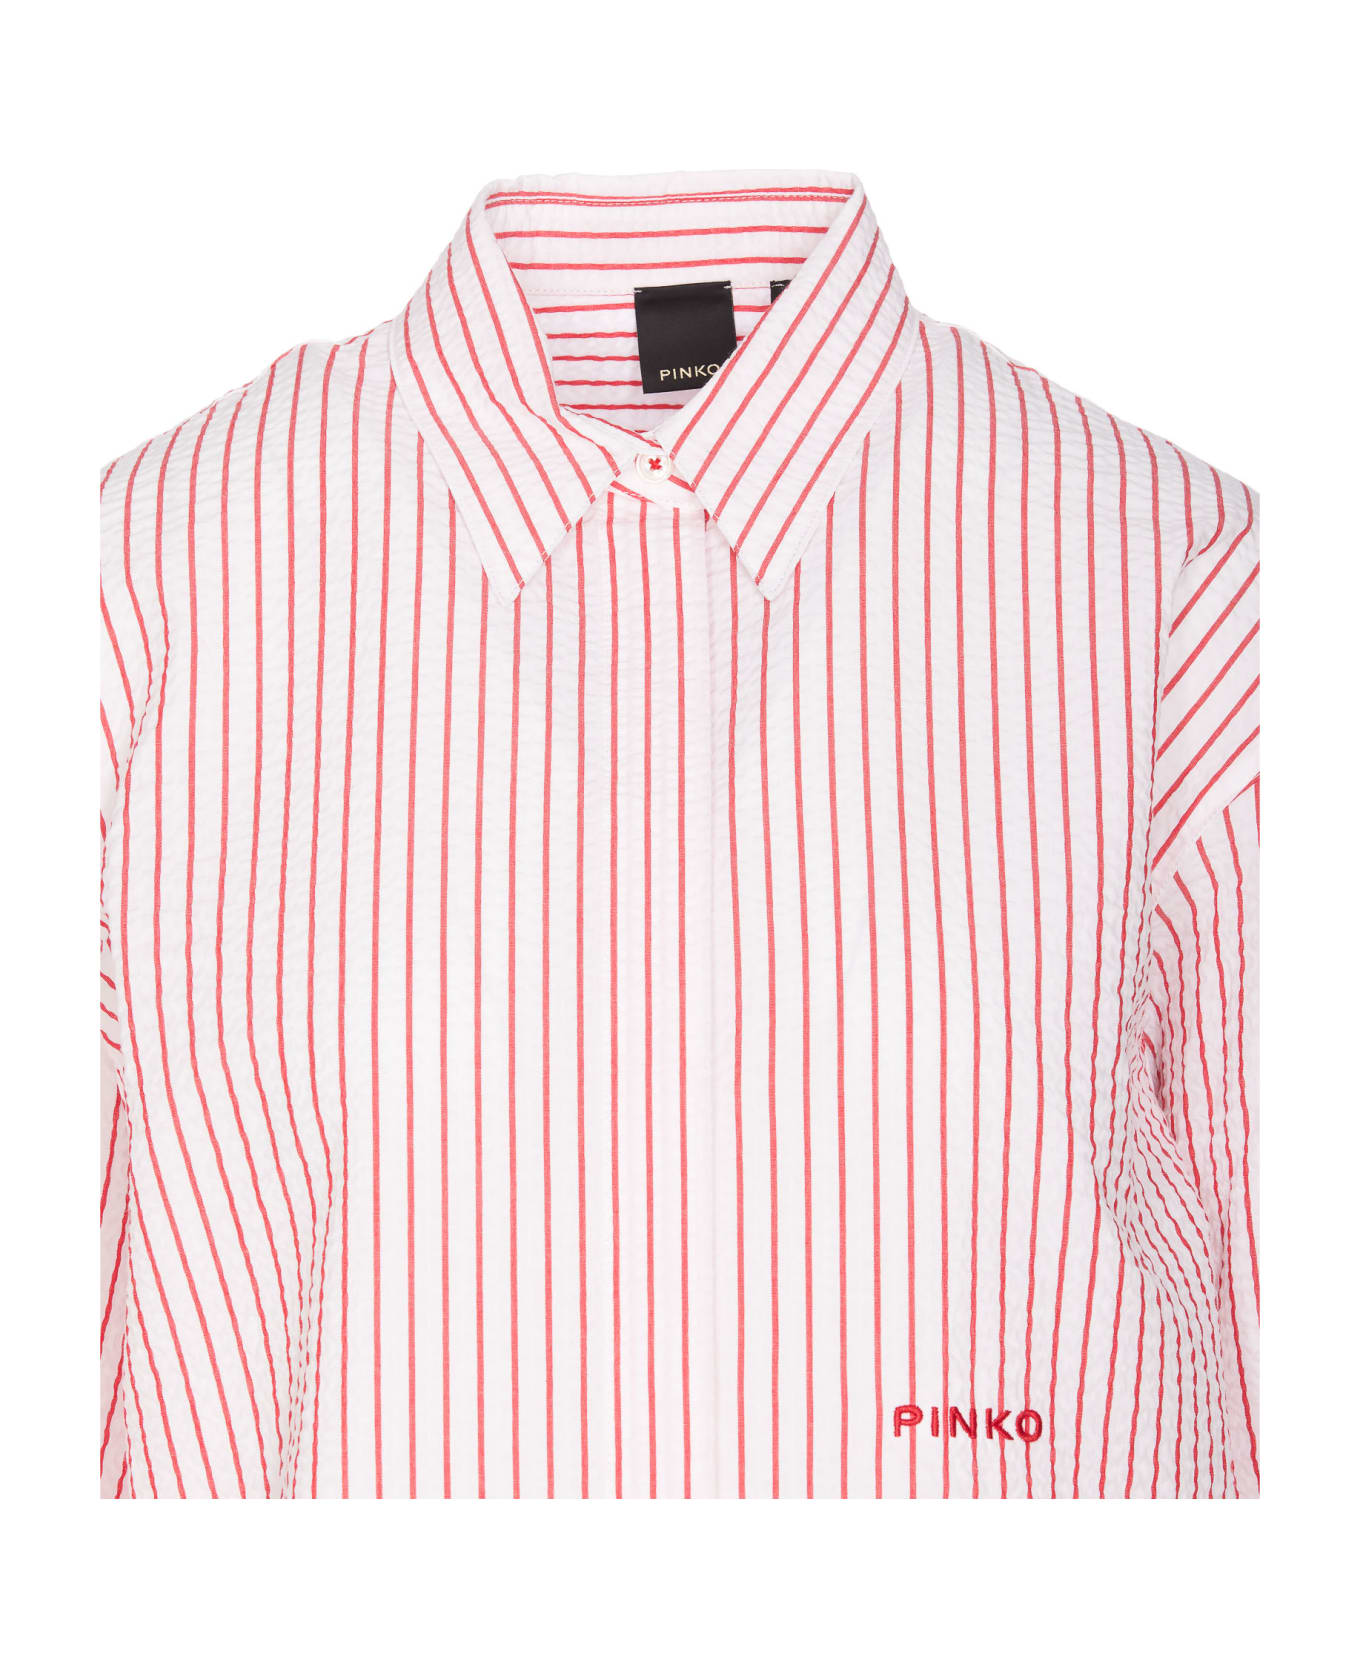 Pinko Seersucker Striped Shirt - Red